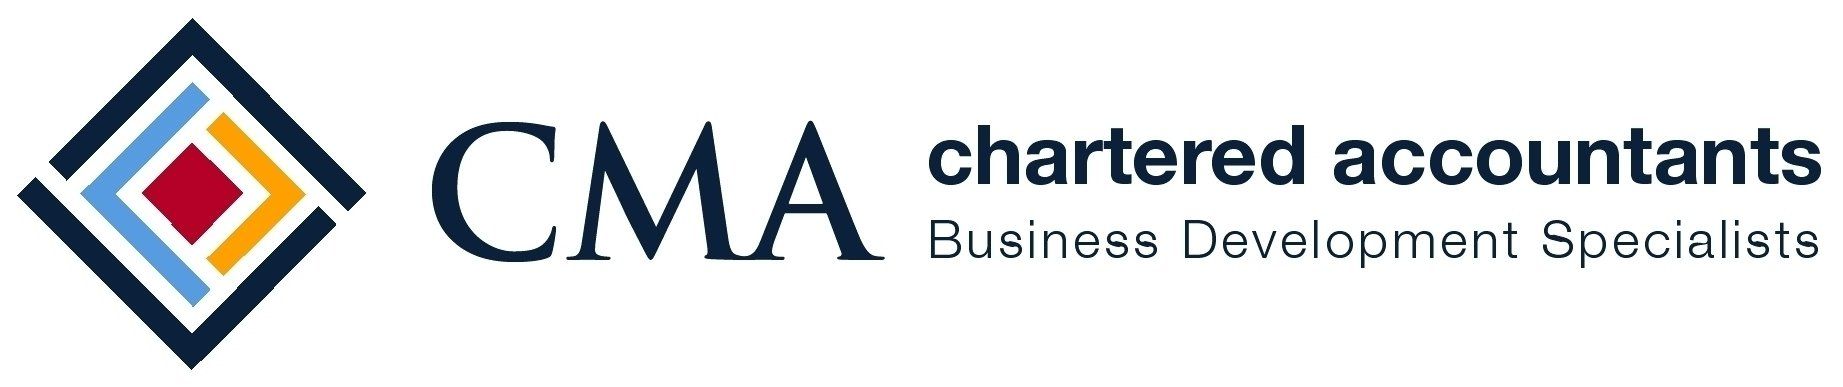 CMA Chartered Accountants logo